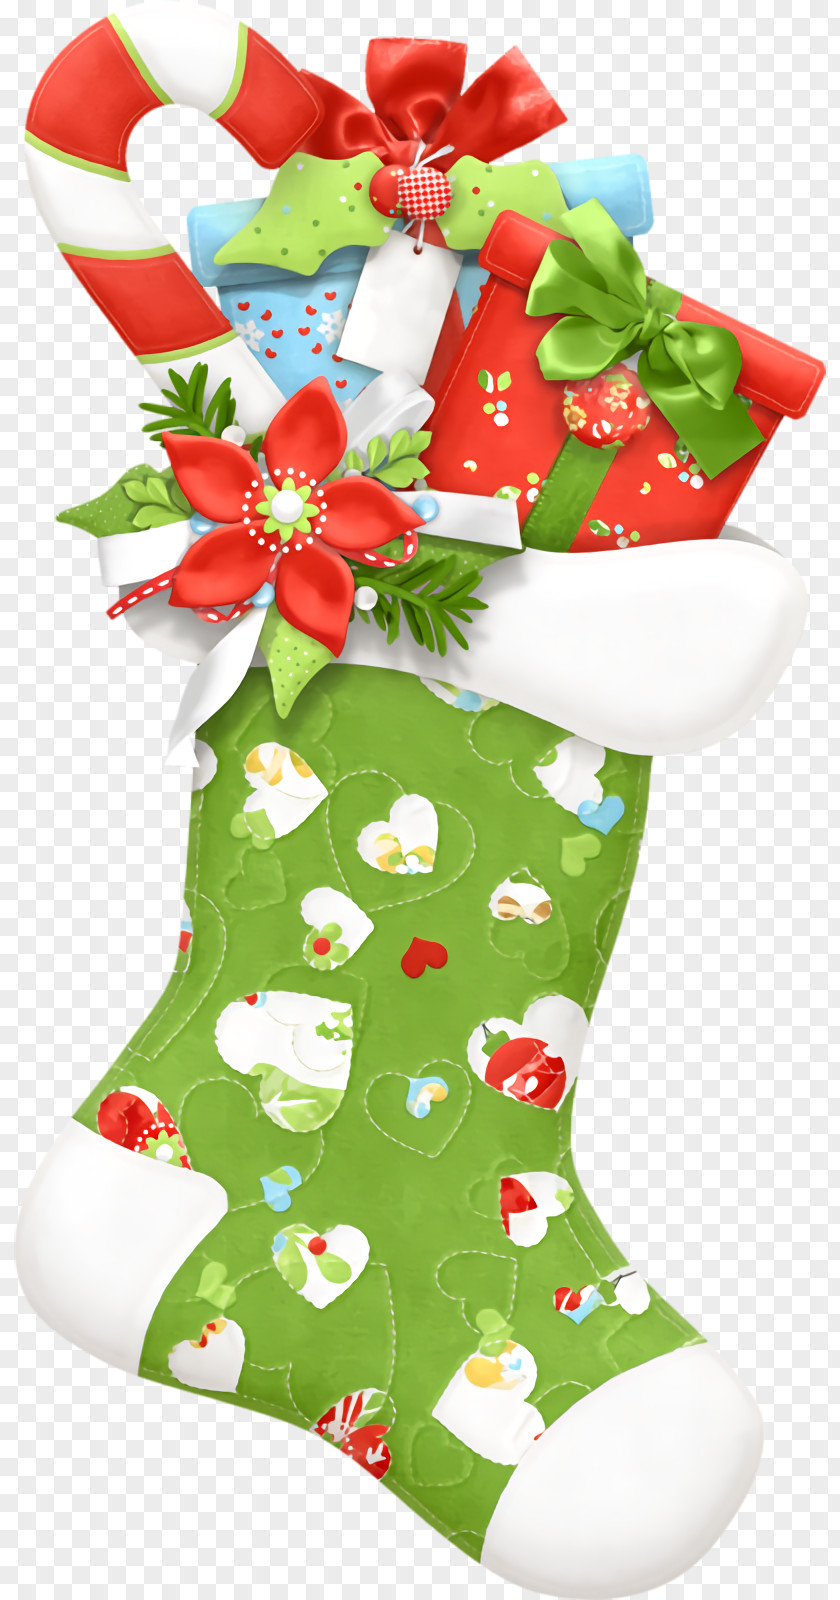 Christmas Tree Ornament Stocking Socks PNG